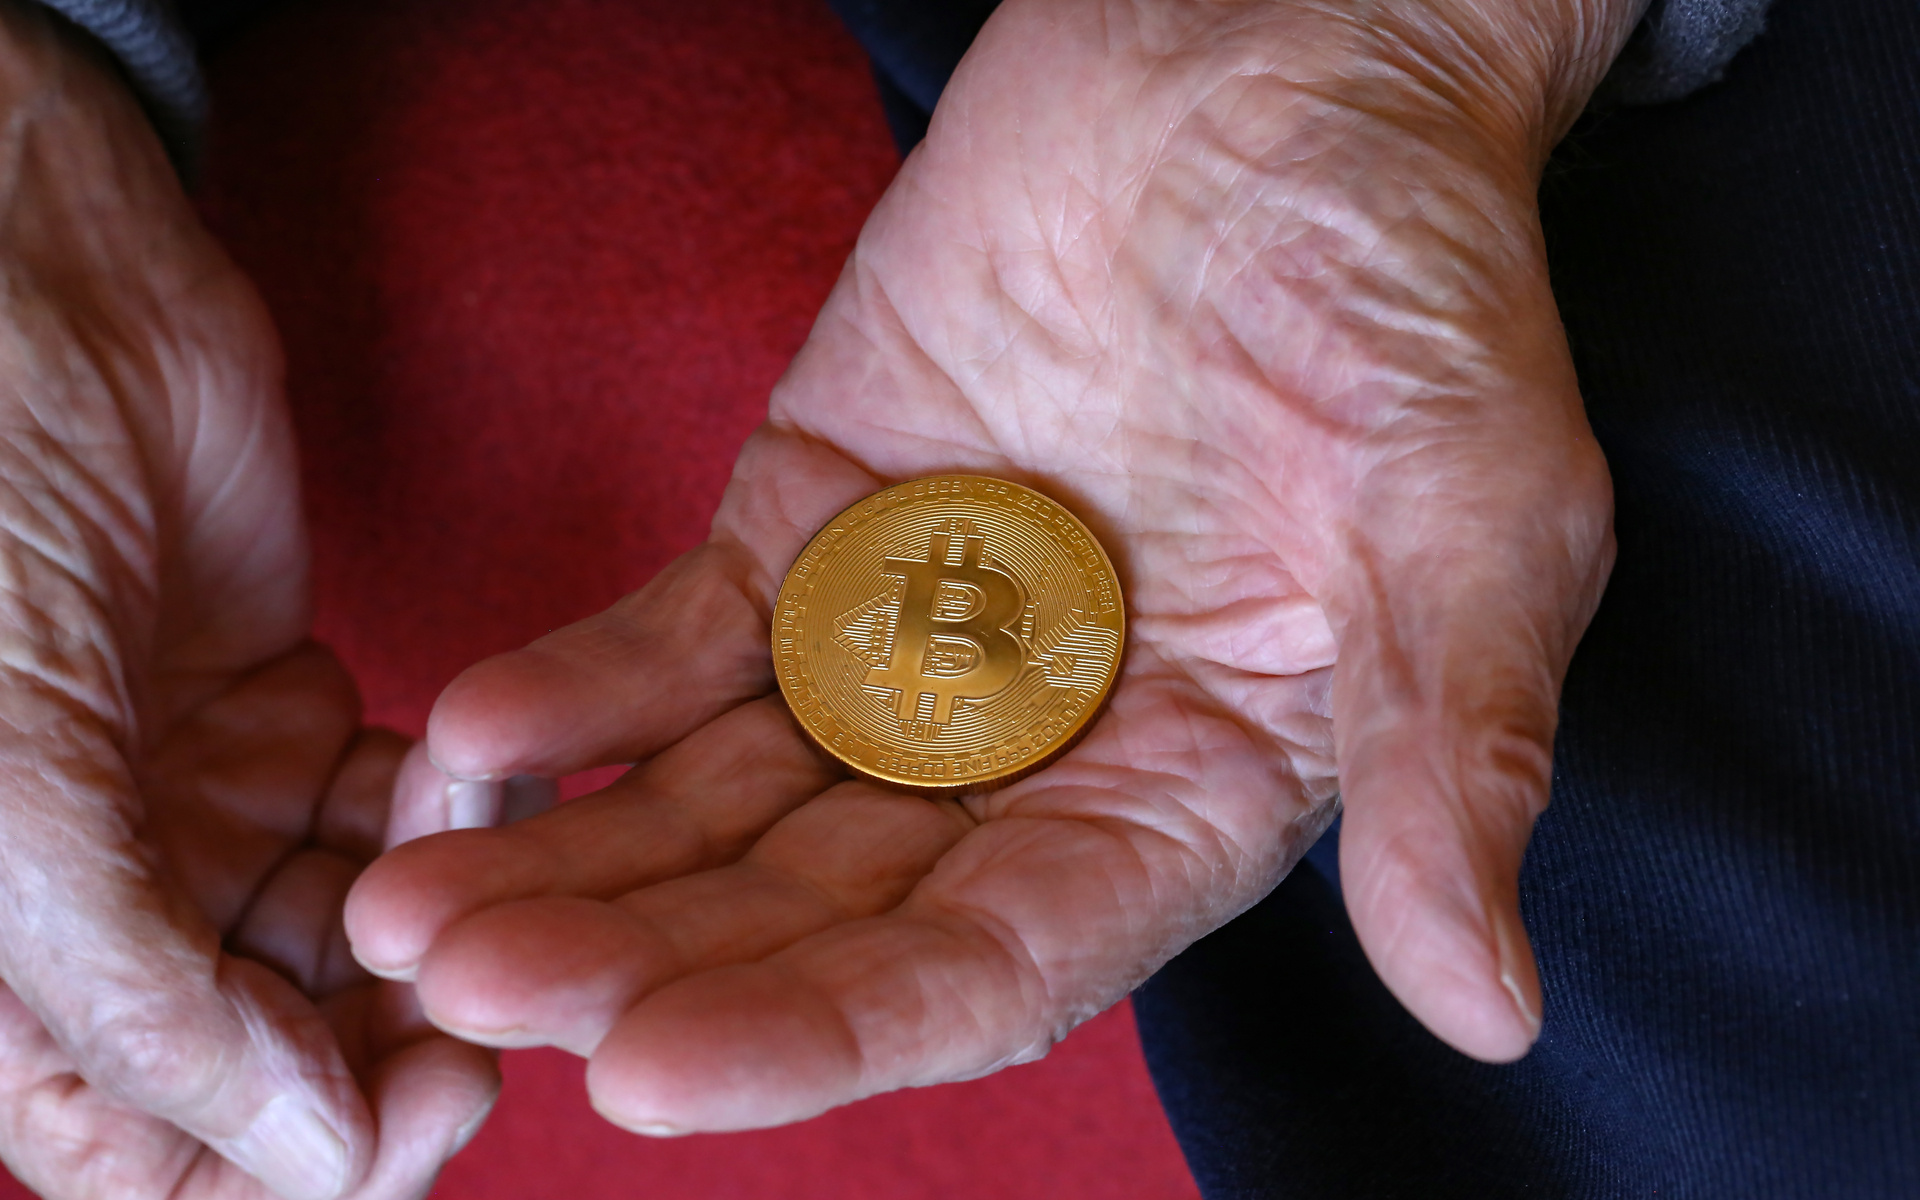 Bitcoin IRA pension product to hit $1 Billion Soon